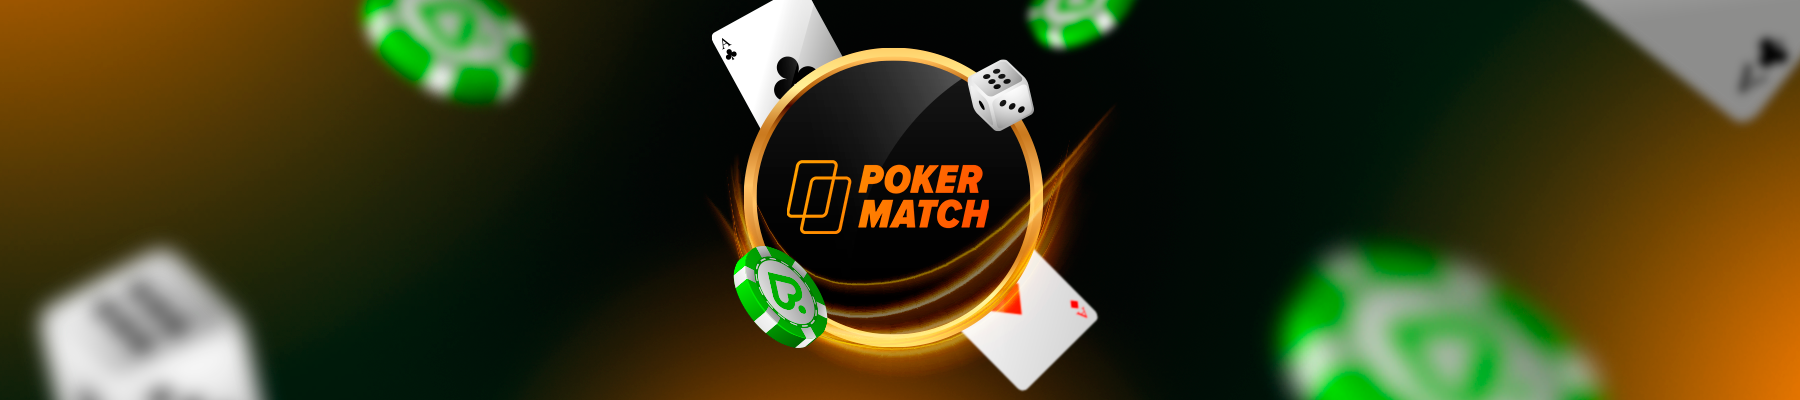 PokerMatch — обзор известного покер-рума